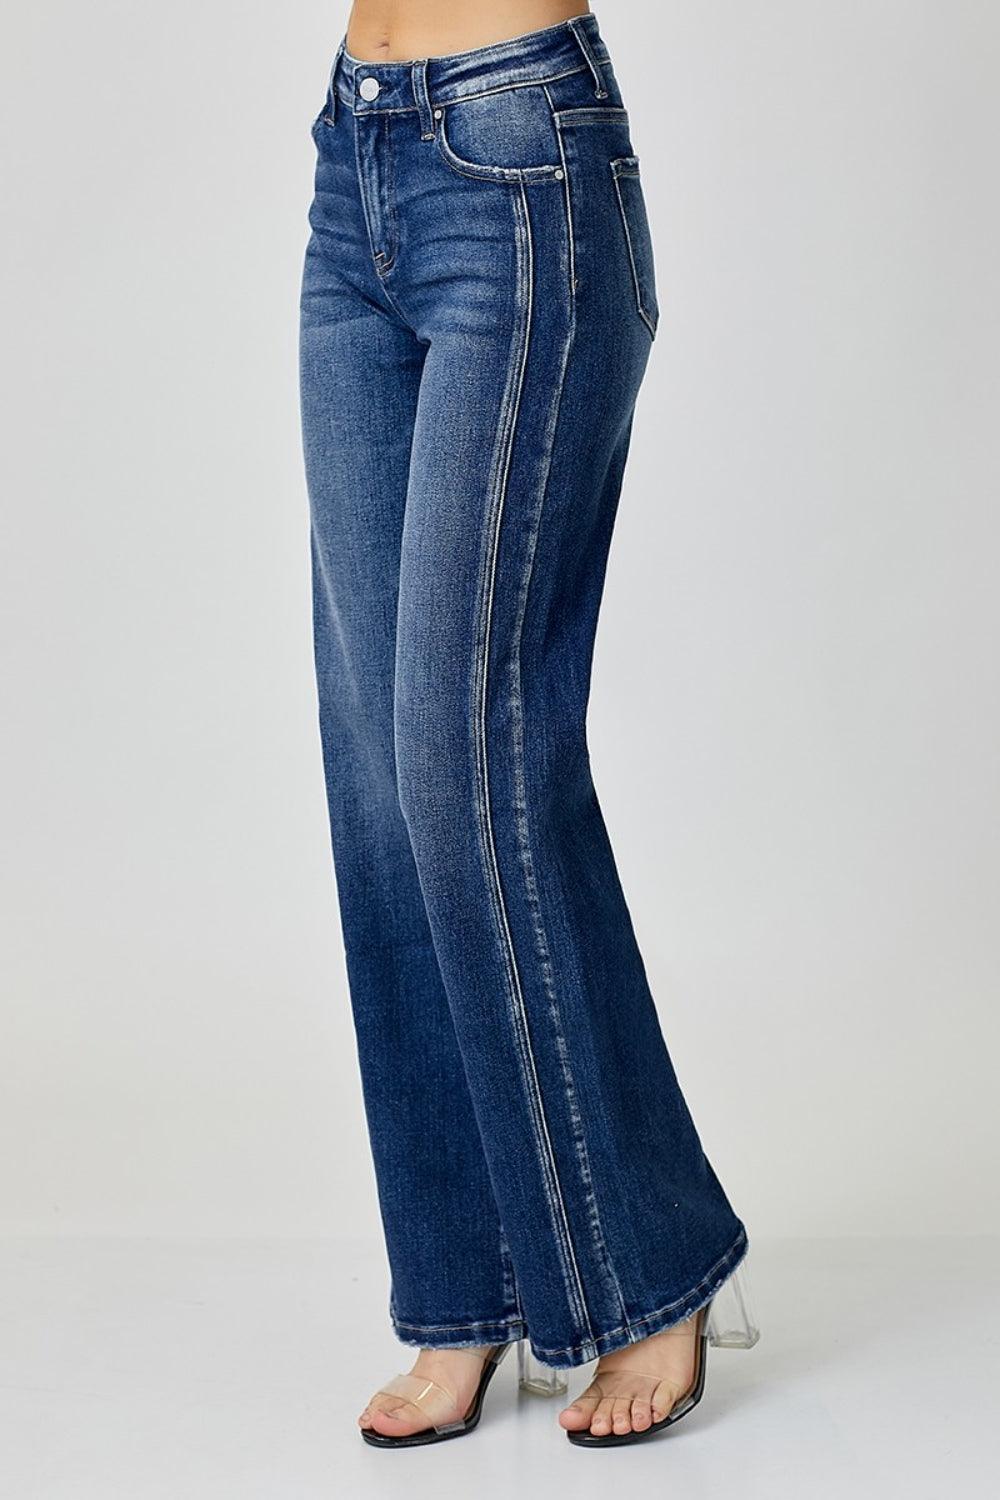 RISEN Mid Rise Straight Jeans - Lucianne Boutique